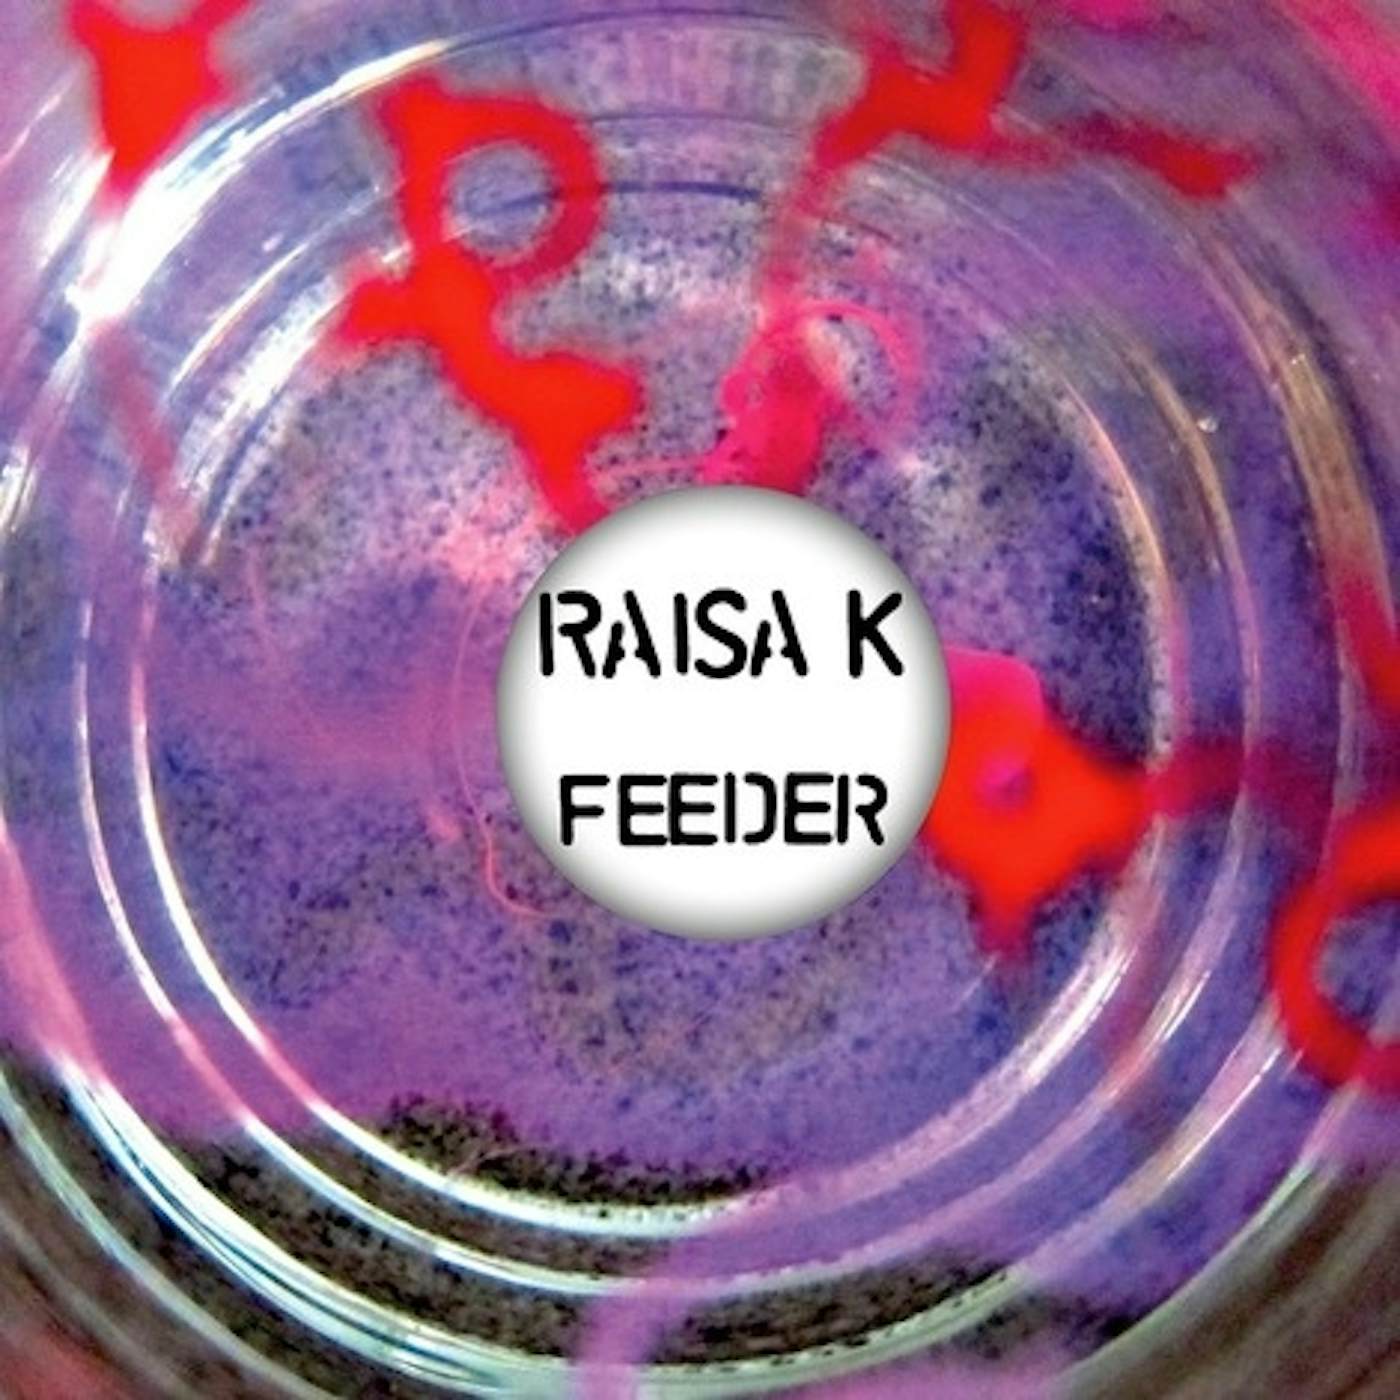 Raisa K Feeder Vinyl Record